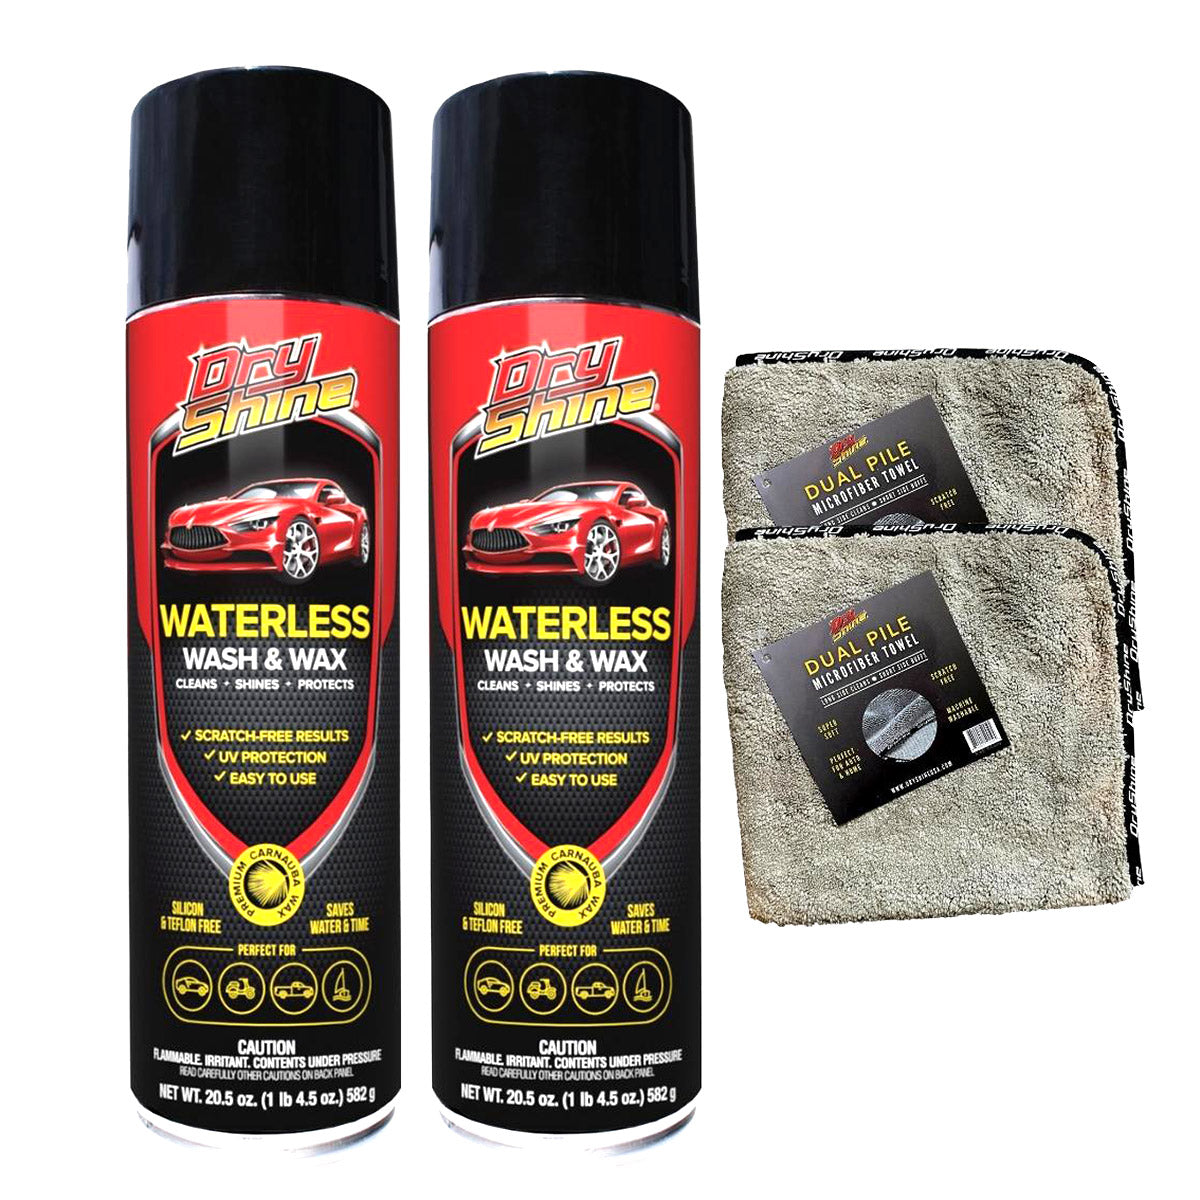 Dry Shine Waterless Car Wash and Wax, Dual Pile Microfiber Towel 2 Pack Image